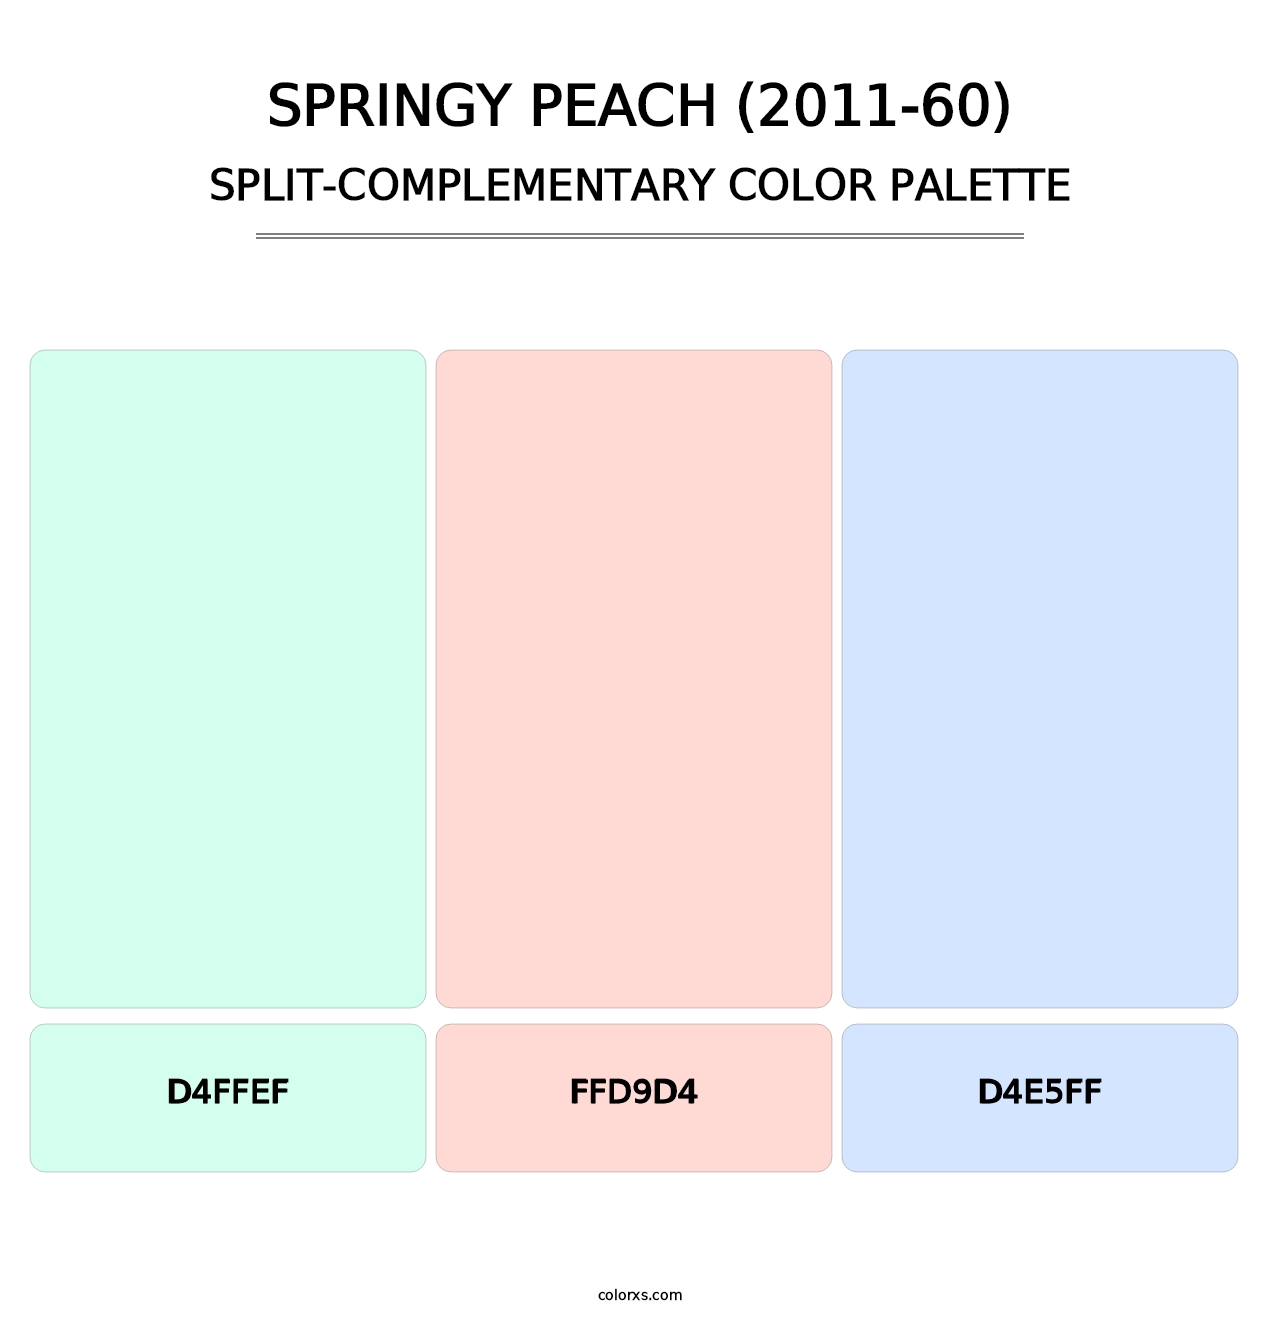 Springy Peach (2011-60) - Split-Complementary Color Palette